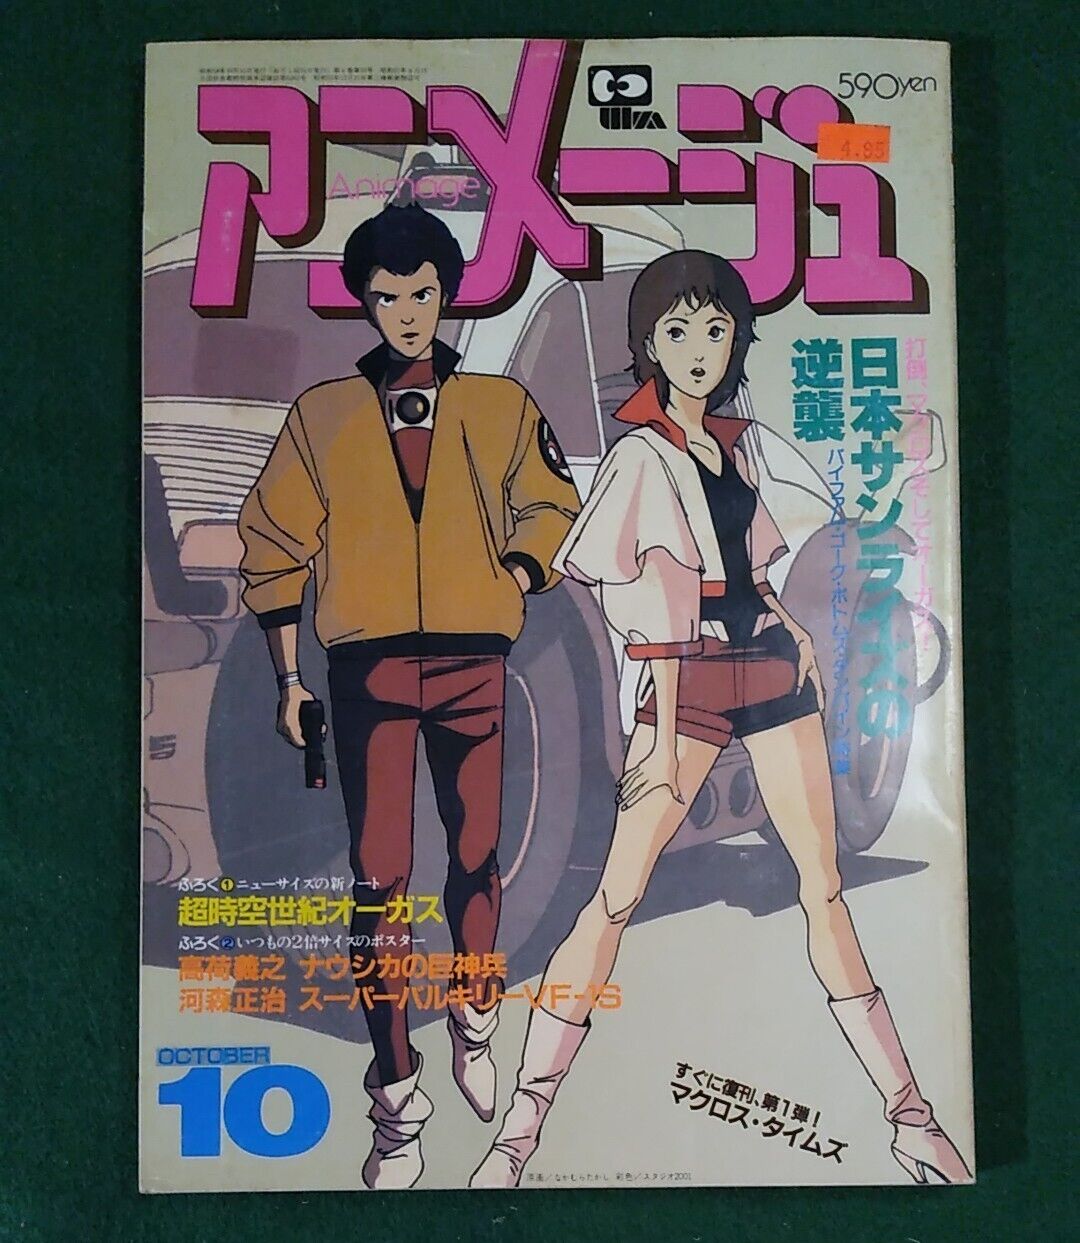 ANIMAGE Oct 1983 Catseye Japan Anime Manga magazine cassette tape covers